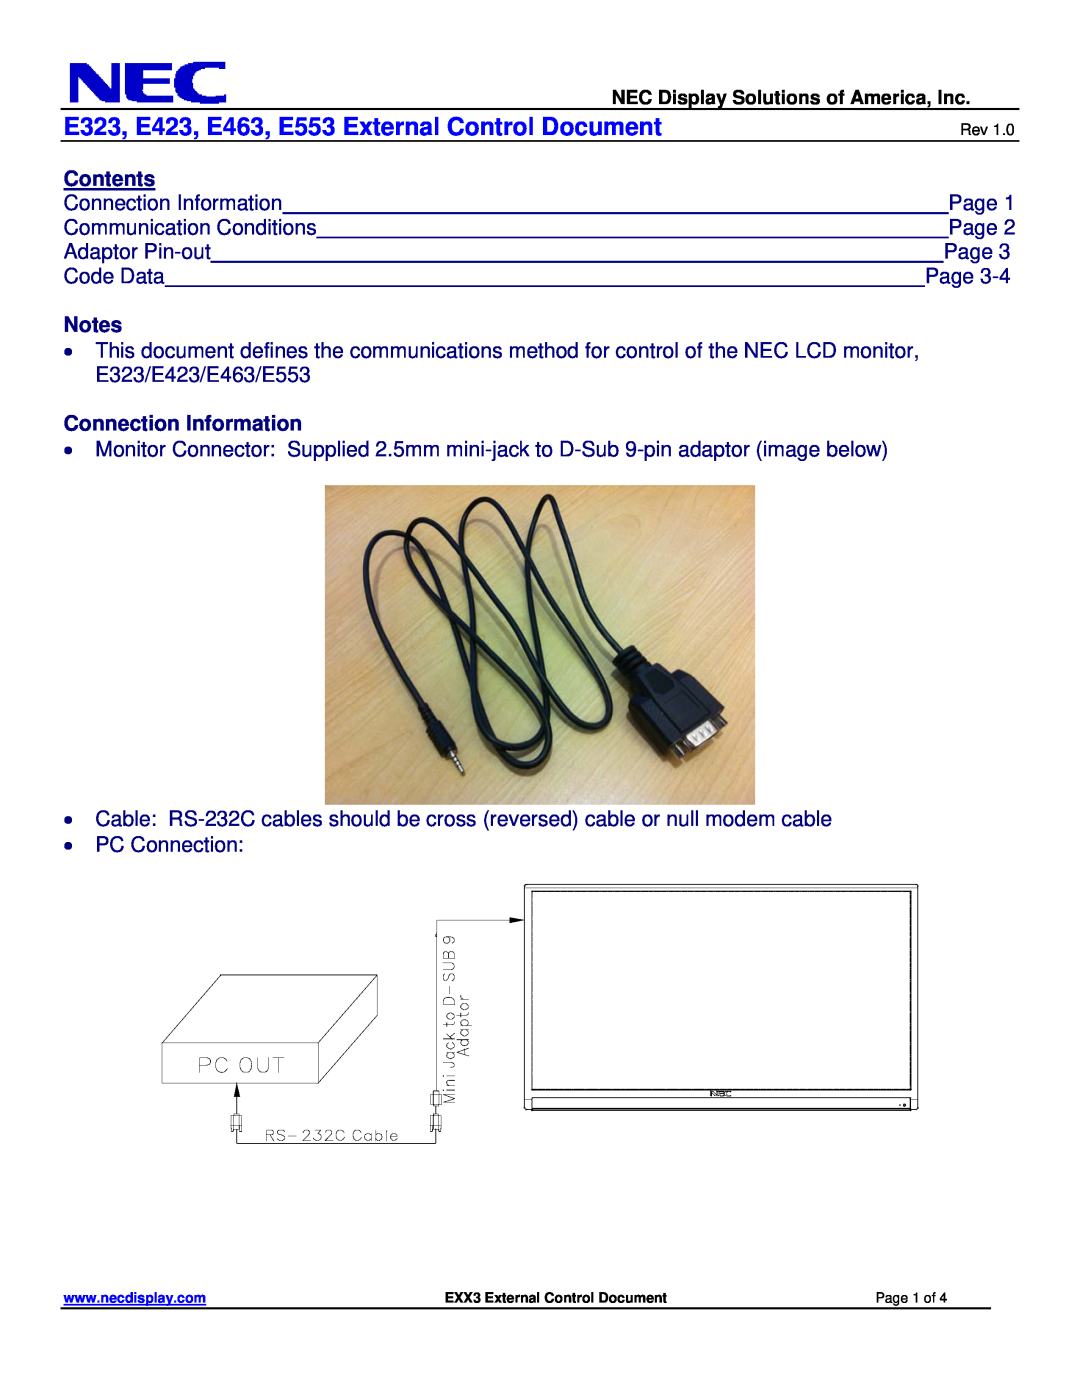 NEC manual E323, E423, E463, E553 External Control Document, Contents, Connection Information 